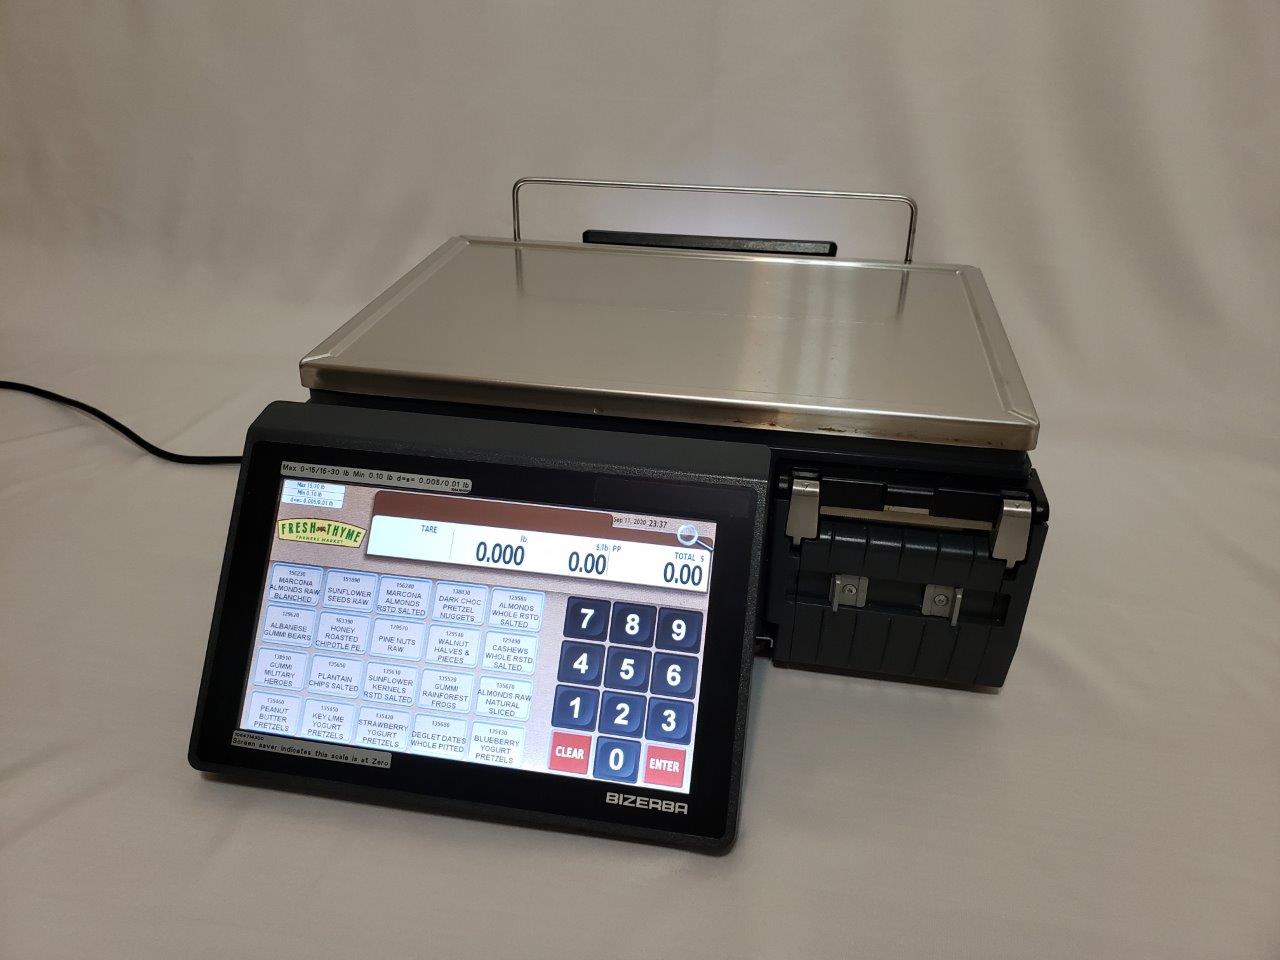 Bizerba Multimedia Scale XC 100 with 3-in-1 Printer